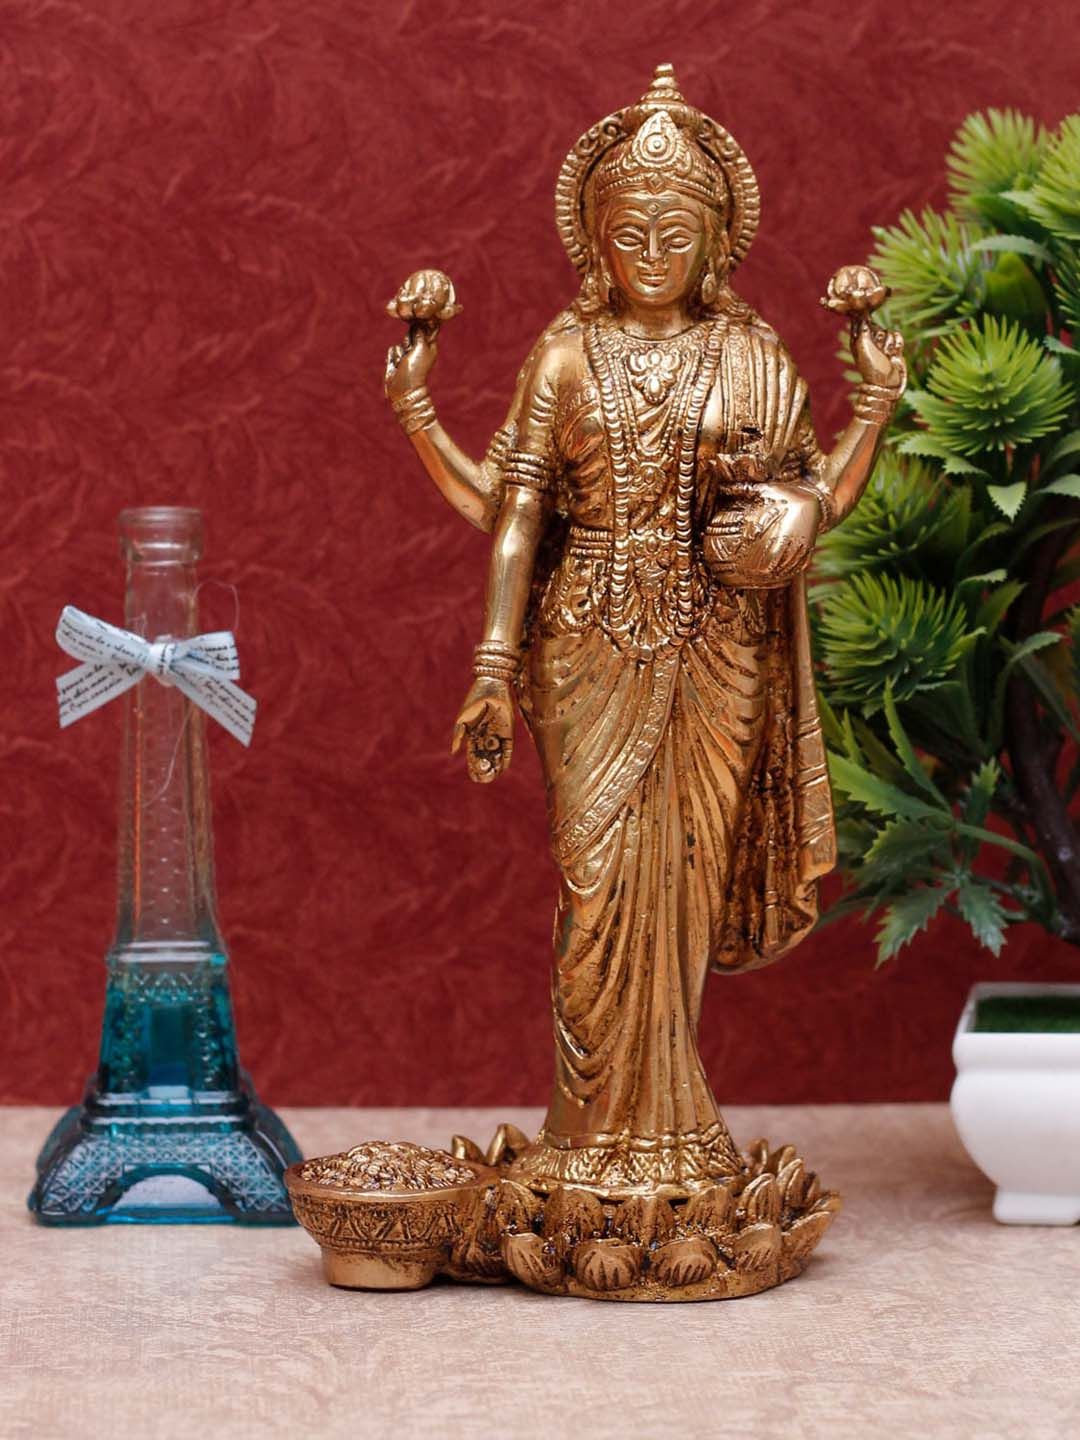 StatueStudio Gold-Tonned Standing Laxmi Idol Showpiece Price in India